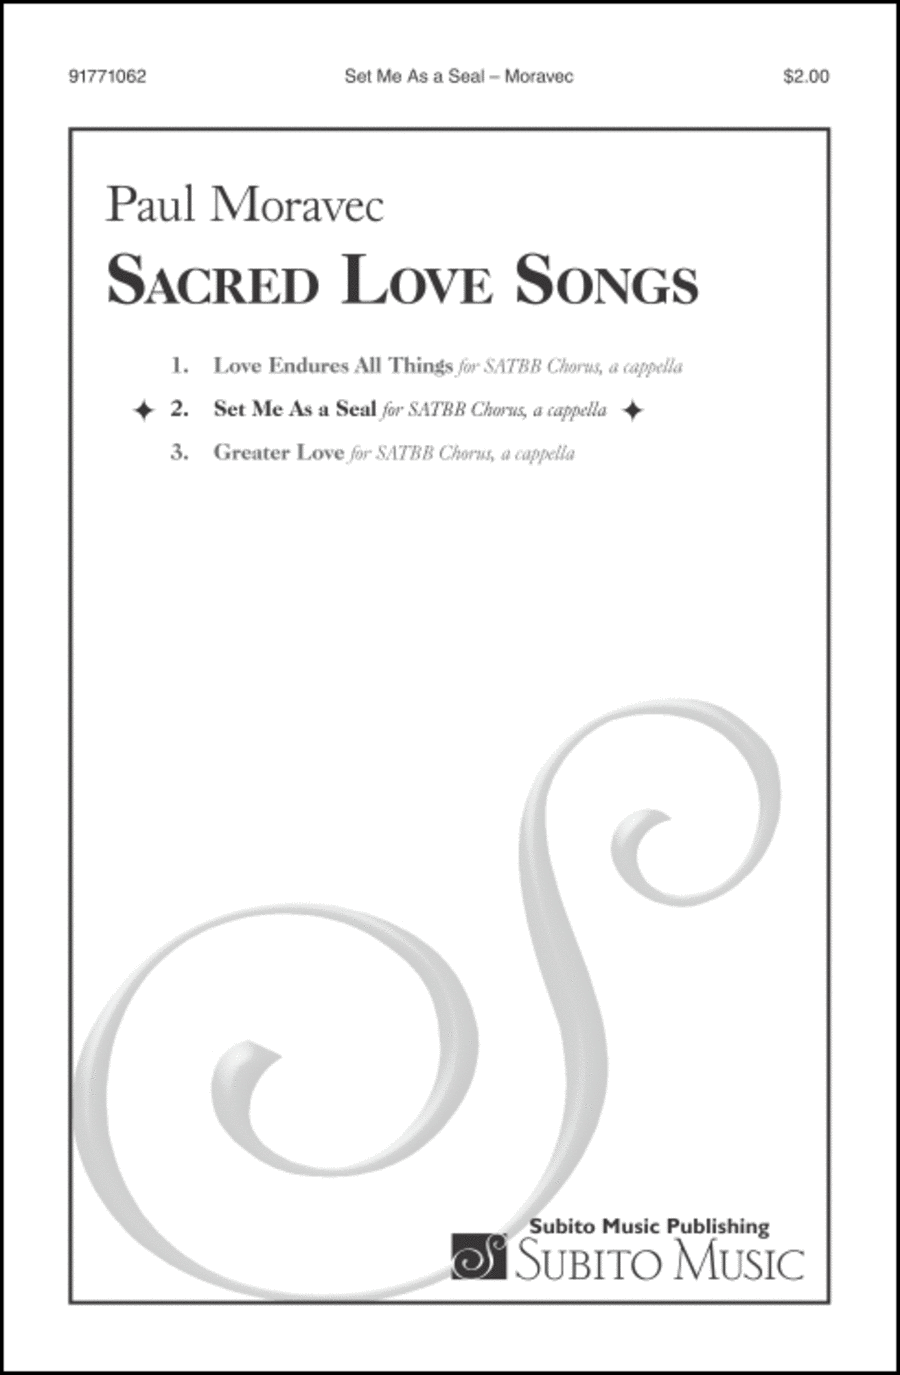 Sacred Love Songs: 2. Set Me As a Seal